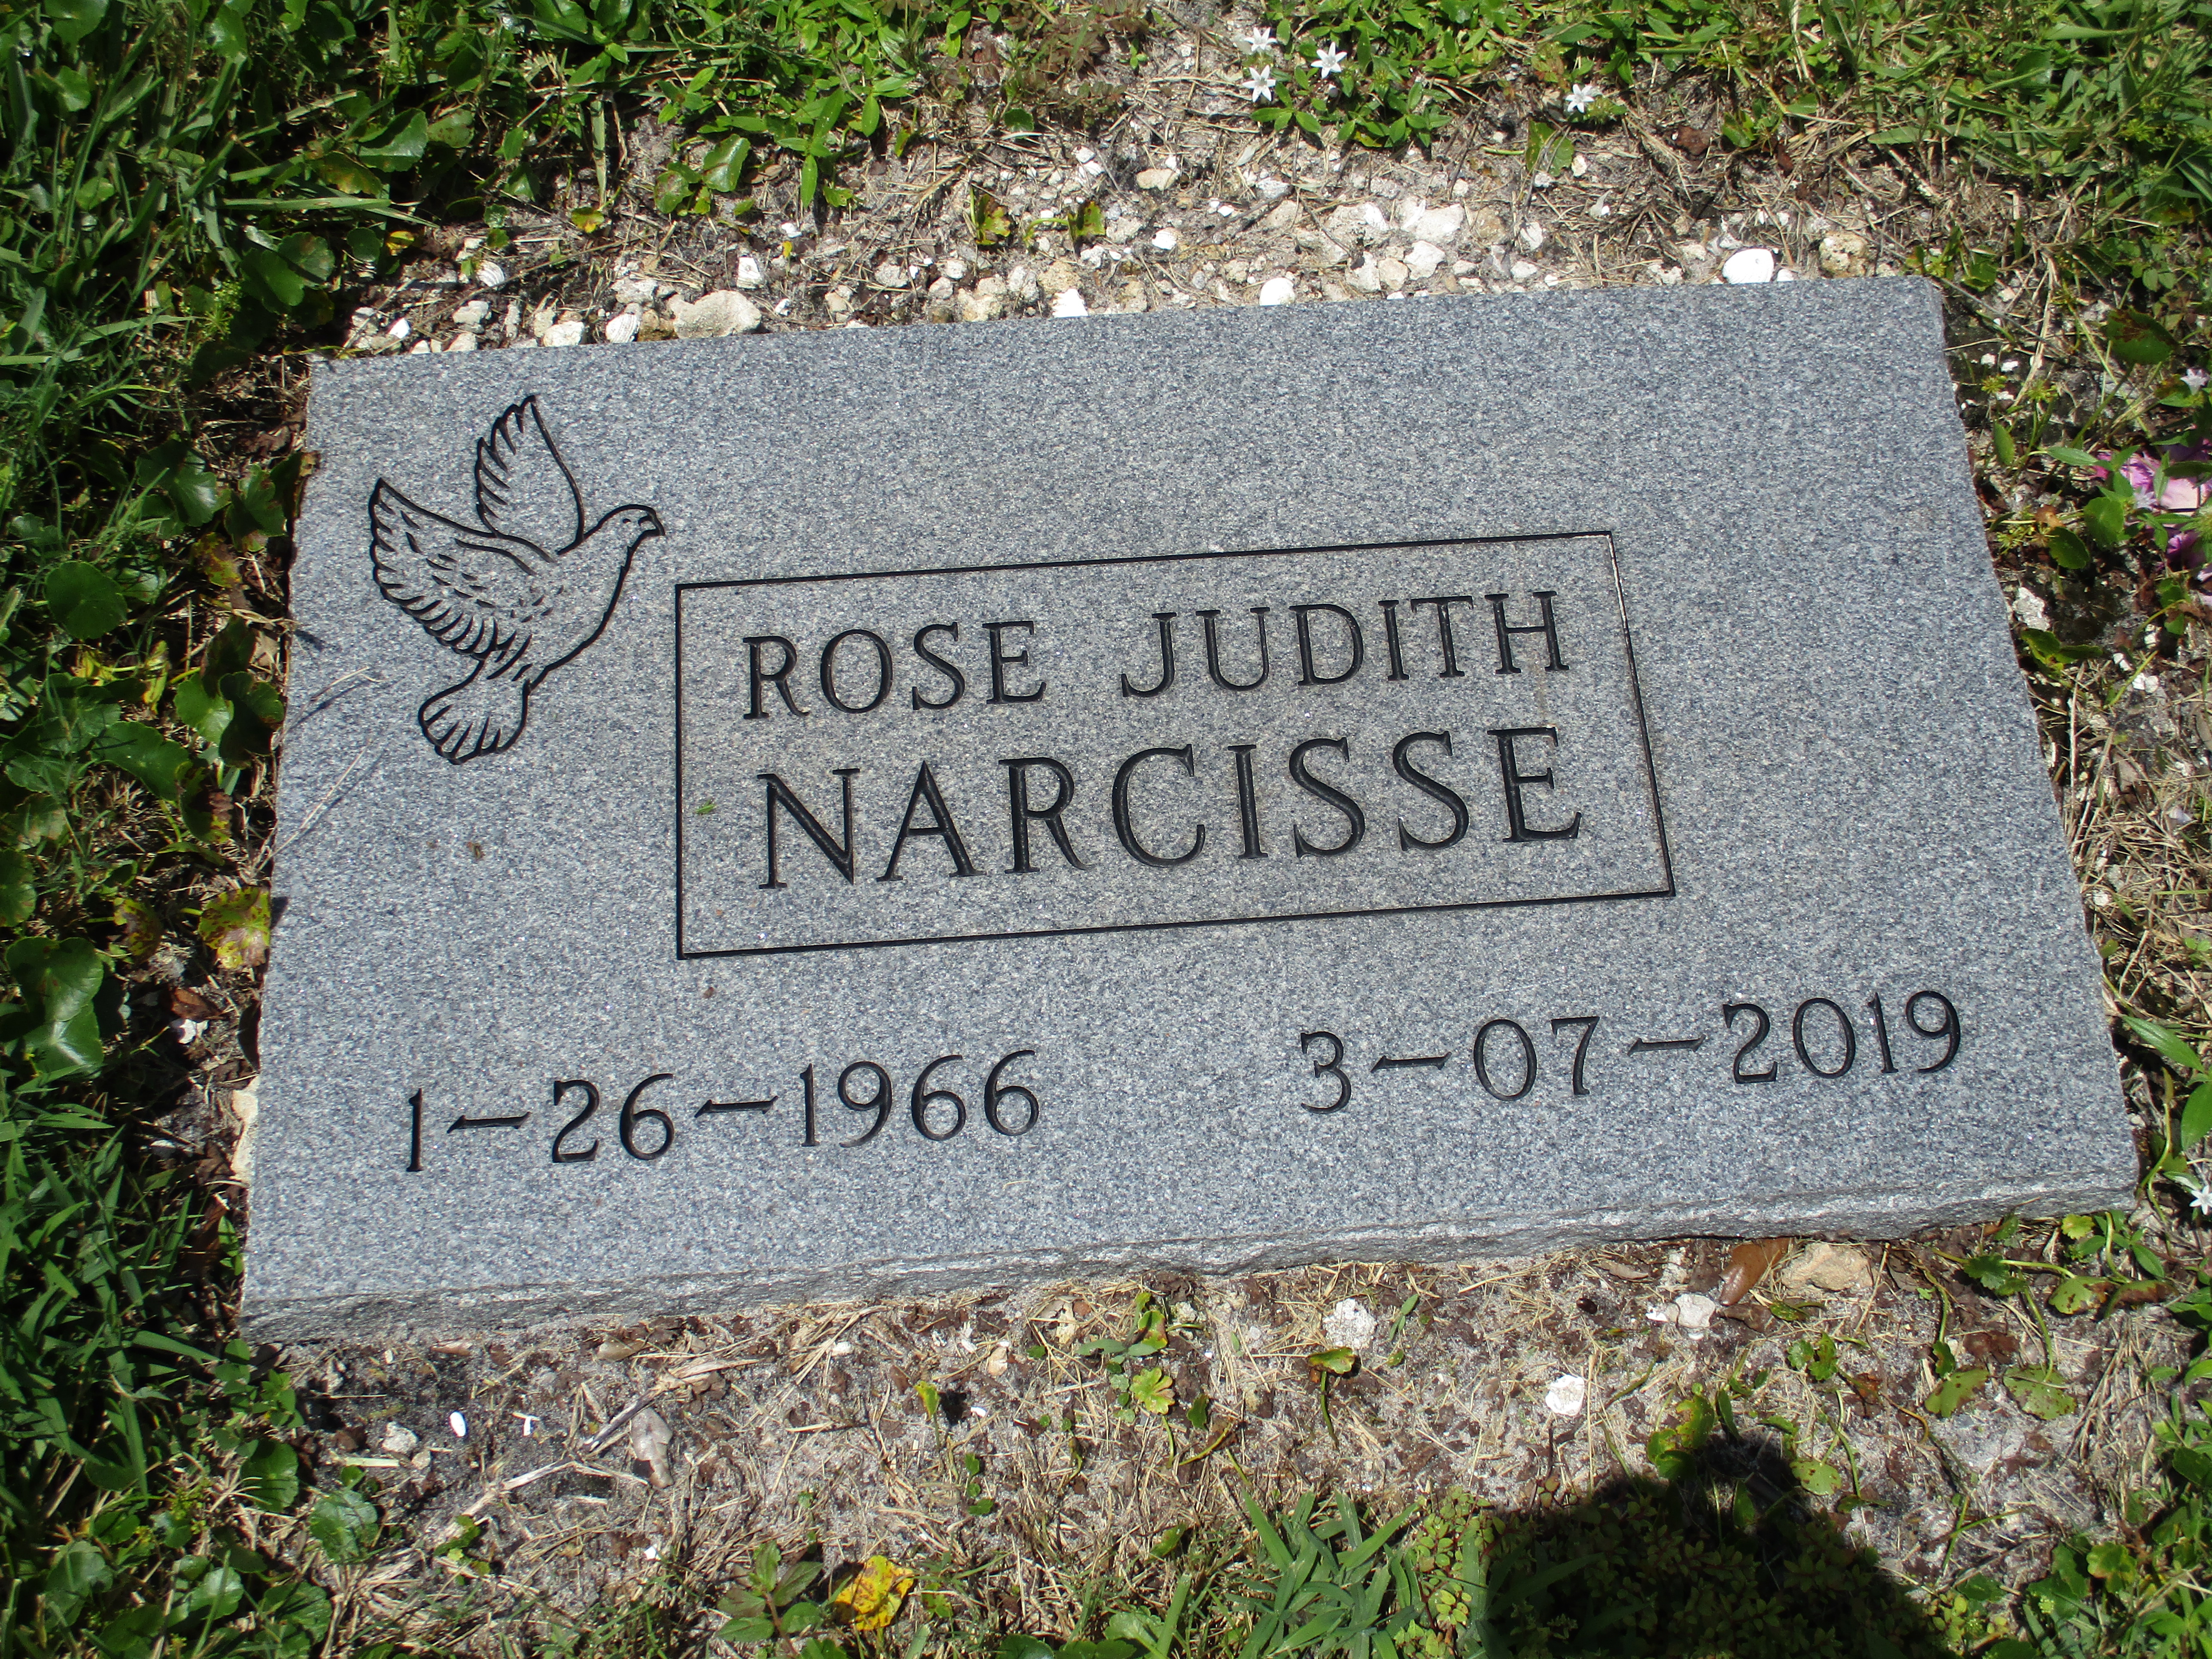 Rose Judith Narcisse